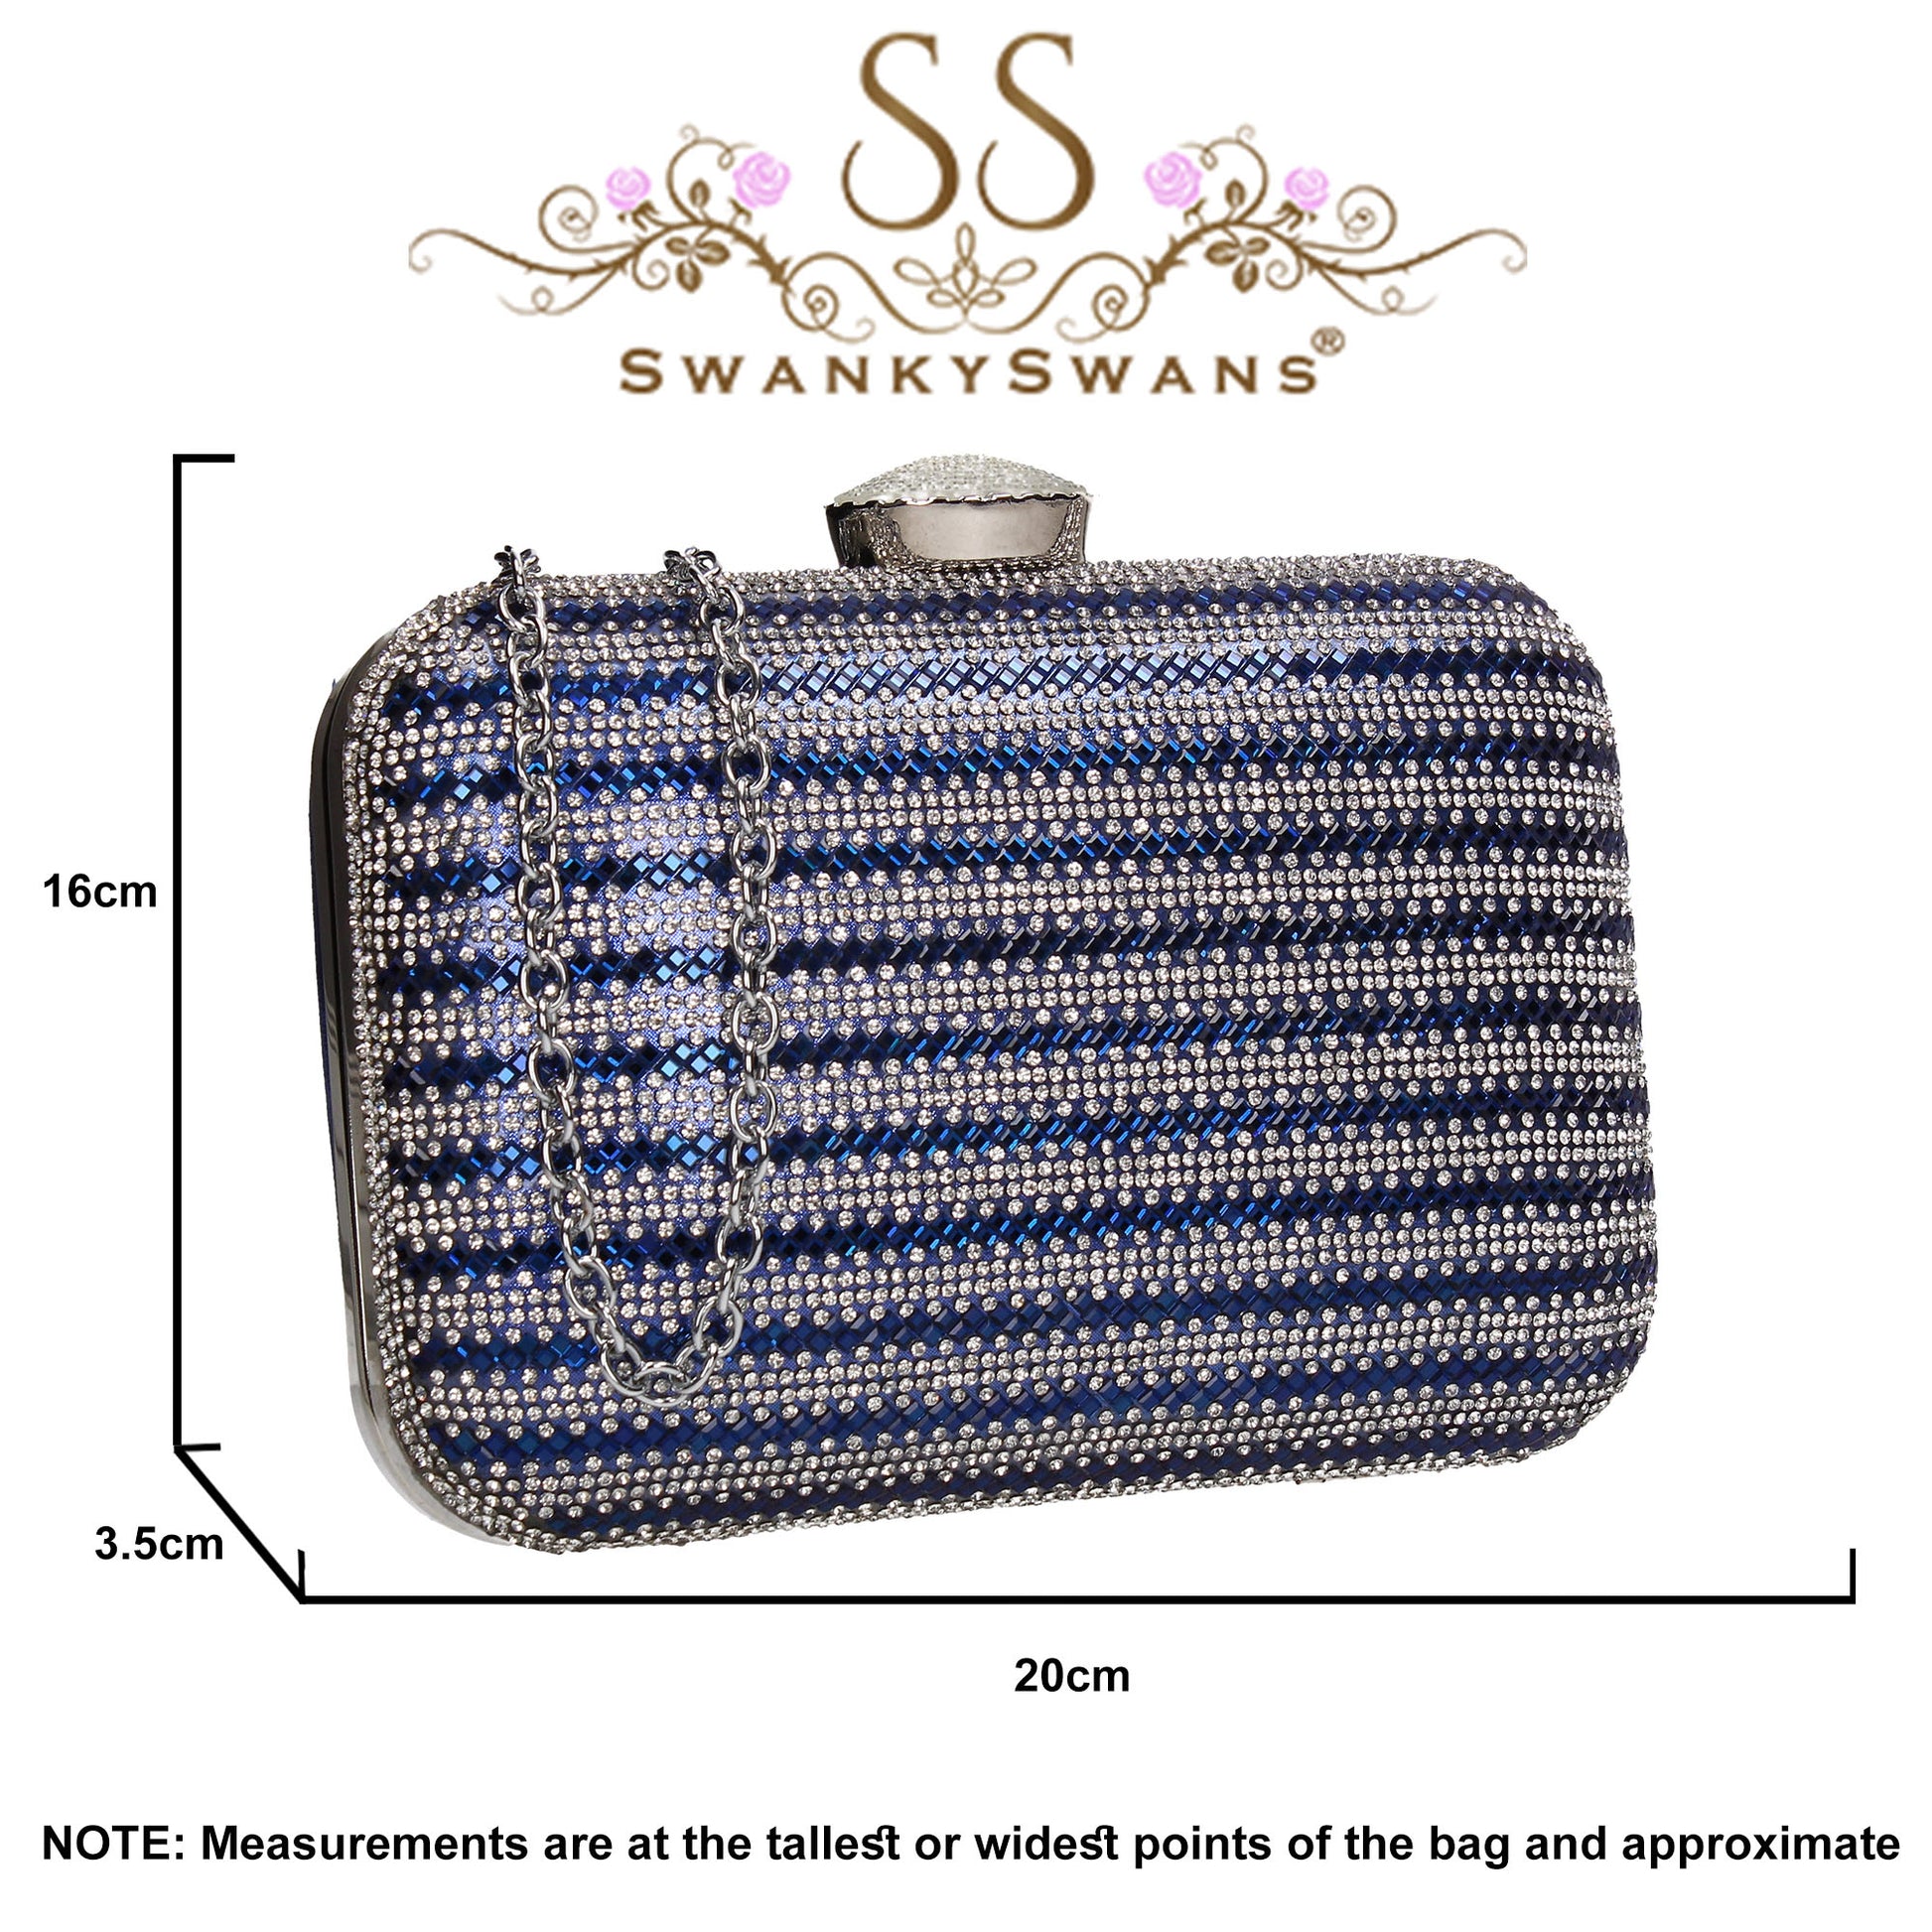 SWANKYSWANS Jane Clutch Bag Blue Cute Cheap Clutch Bag For Weddings School and Work